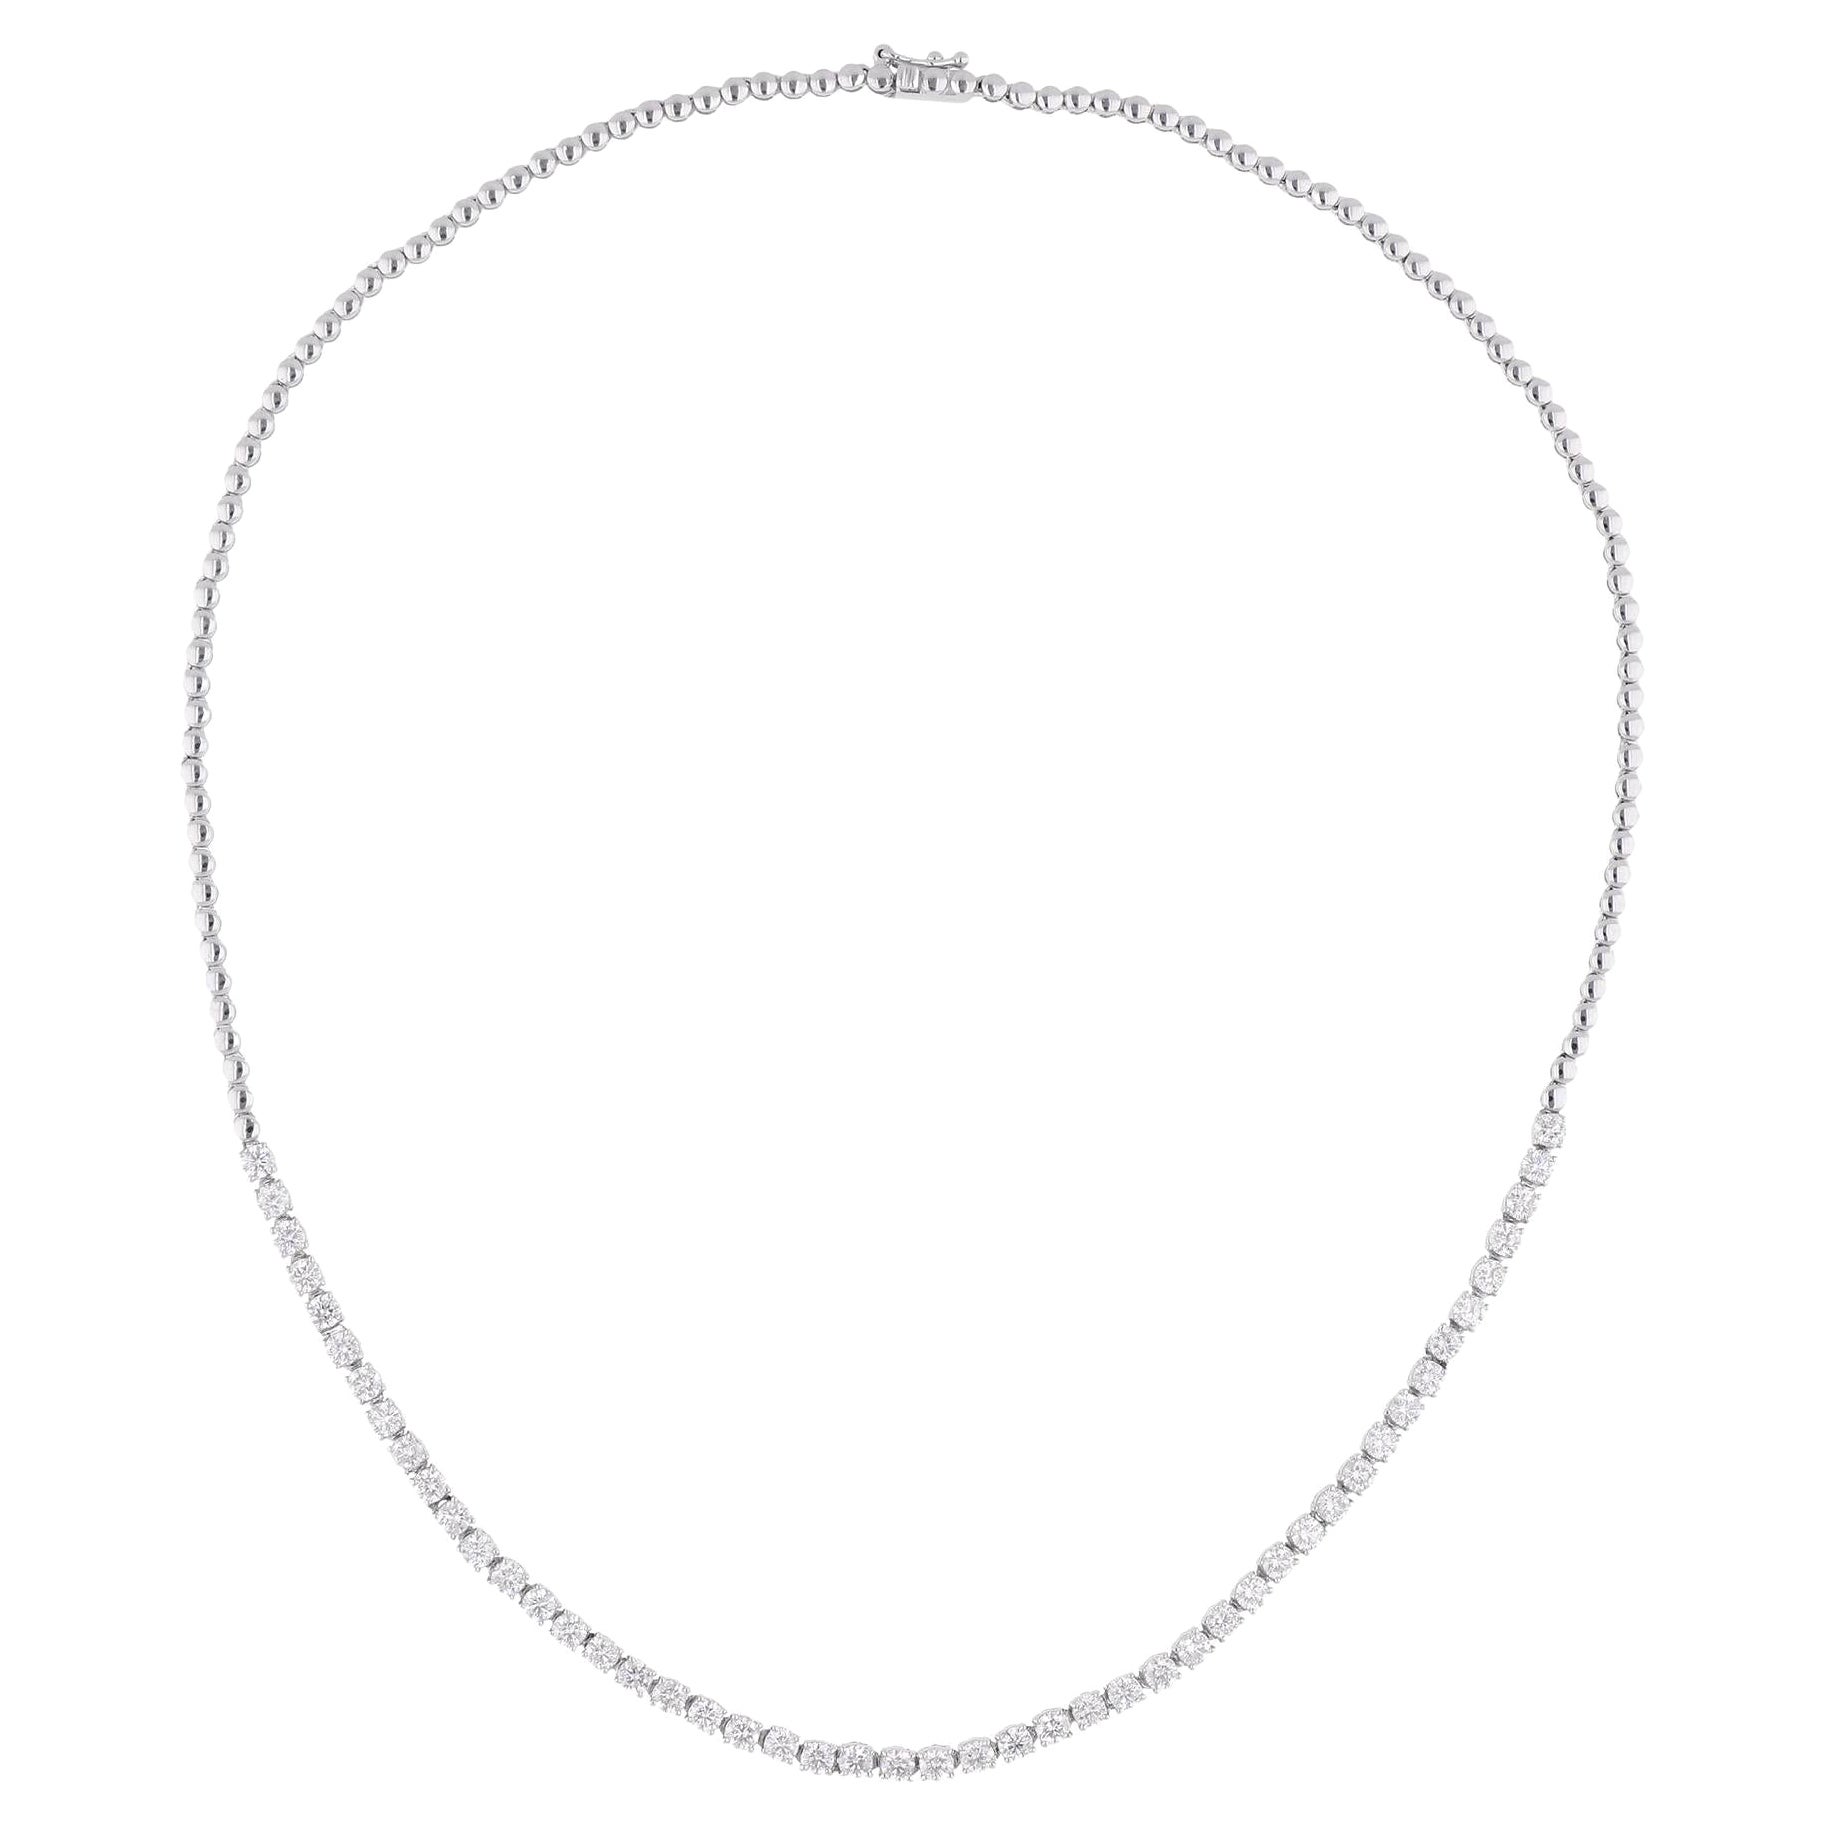 Natural 3.81 Carat Round Diamond Necklace Solid 14 Karat White Gold Fine Jewelry